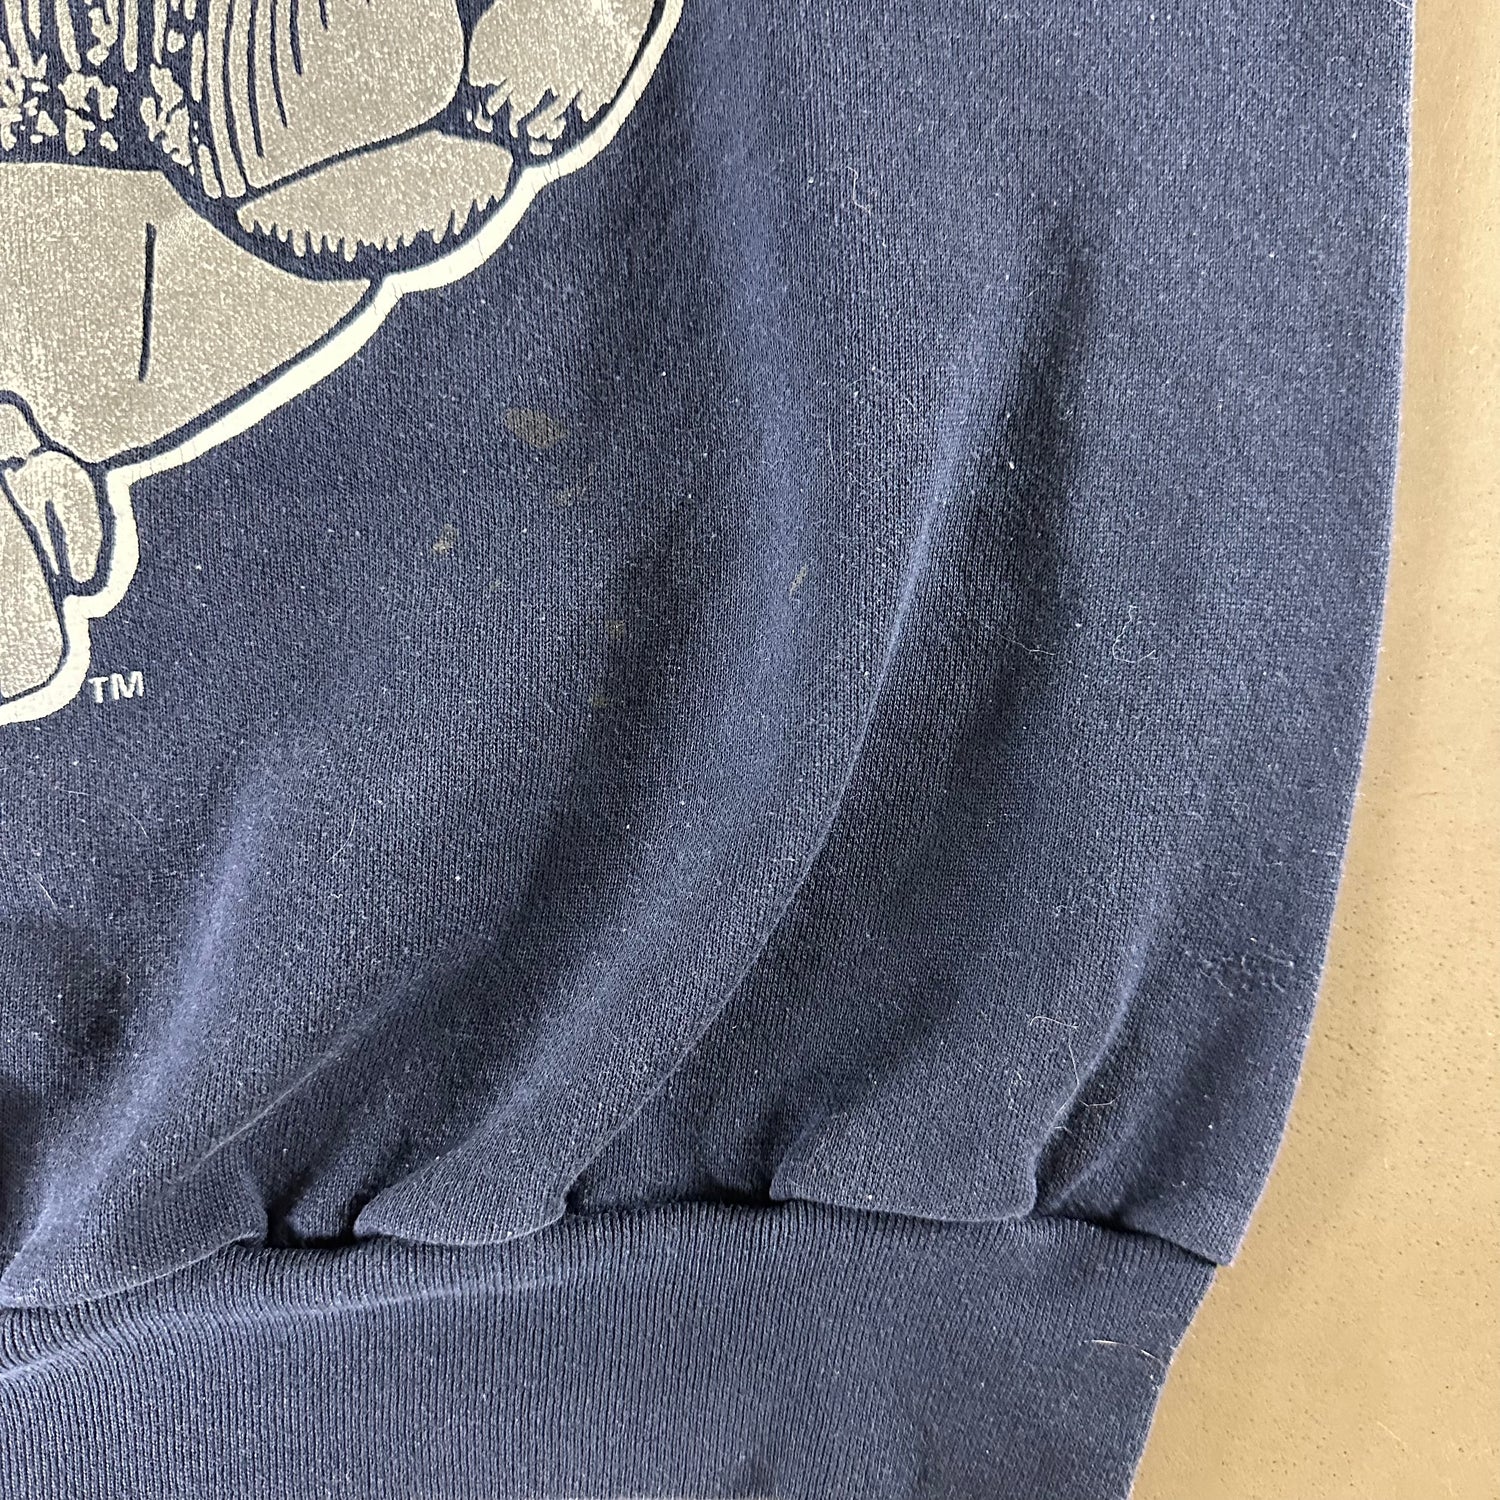 Vintage 1990s Penn State University Sweatshirt size Large